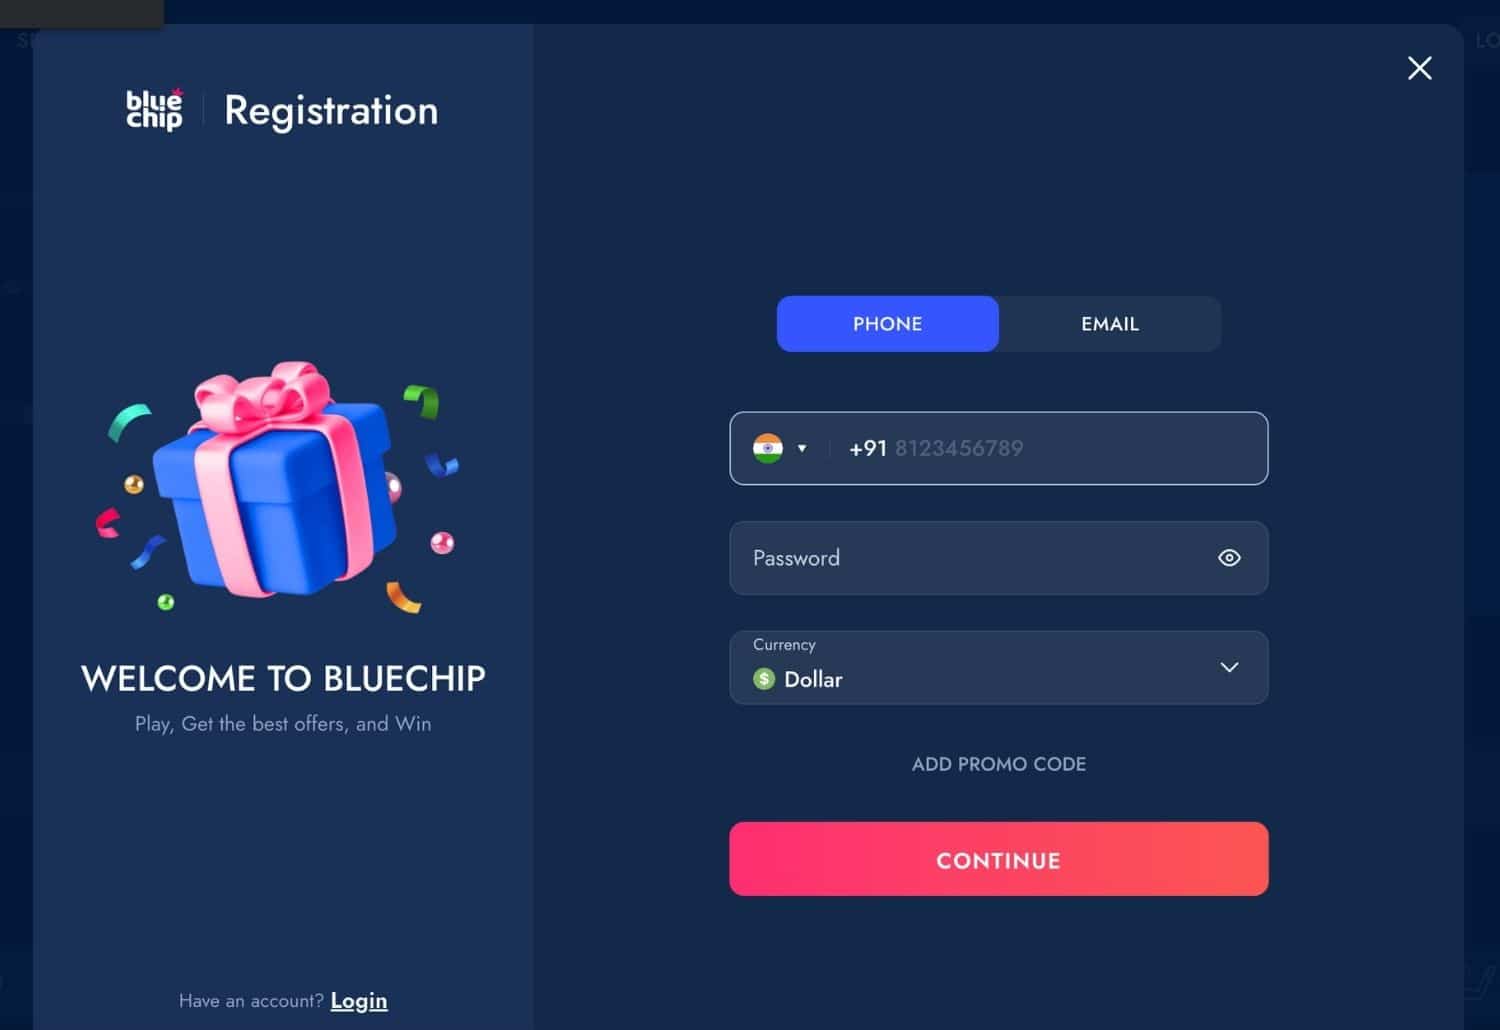 Bluechip Casino India registration form review